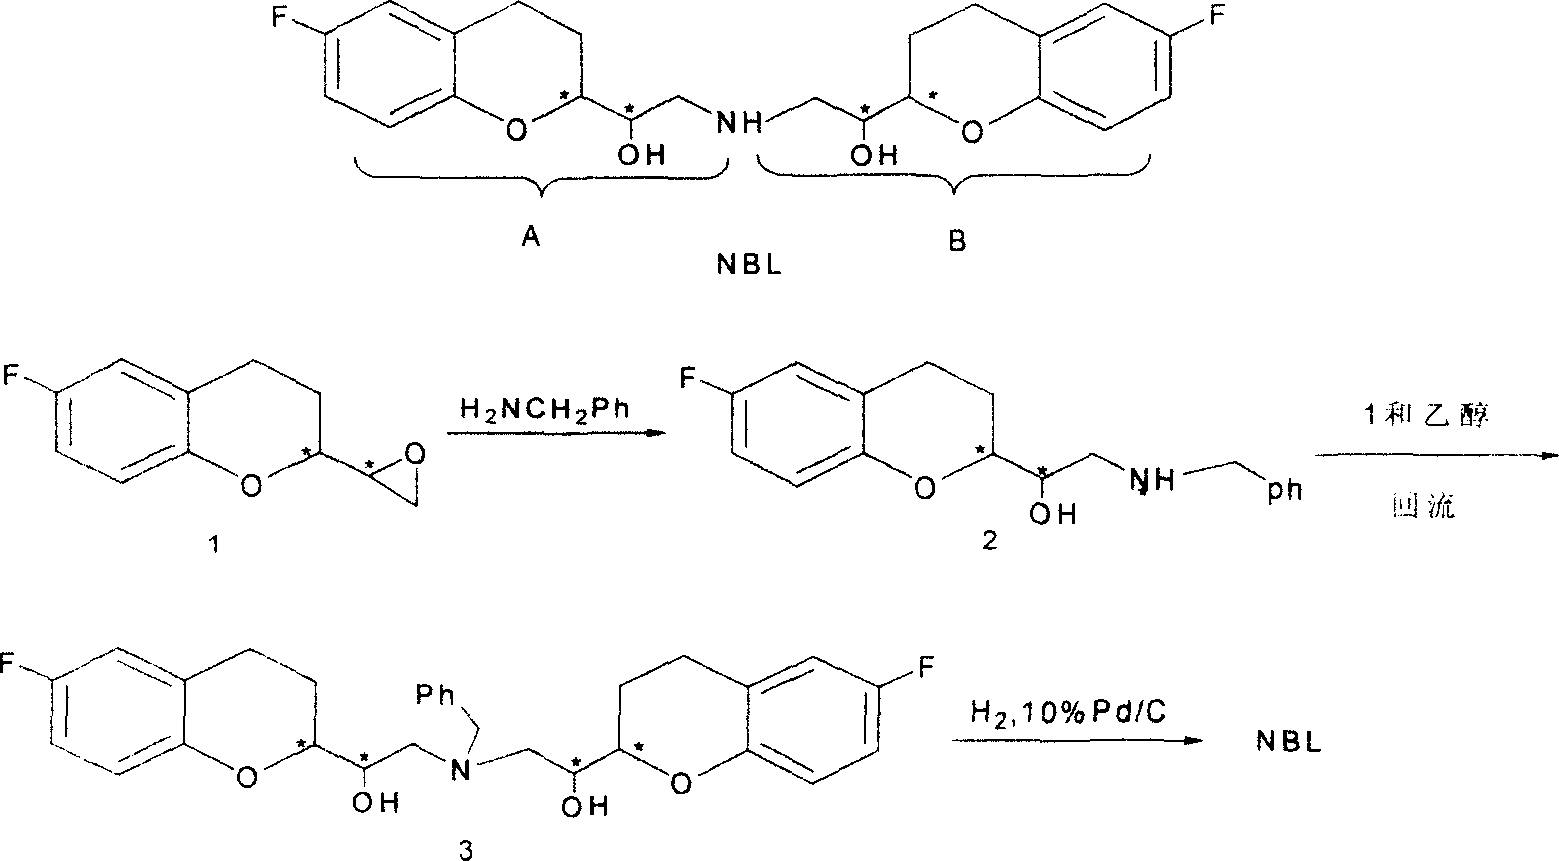 2,2'-[iminodi(methylene)di-(6-fluoro-3,4-dihydro-2H-1-benzenepyran-2- methanol) methane sulfosalt